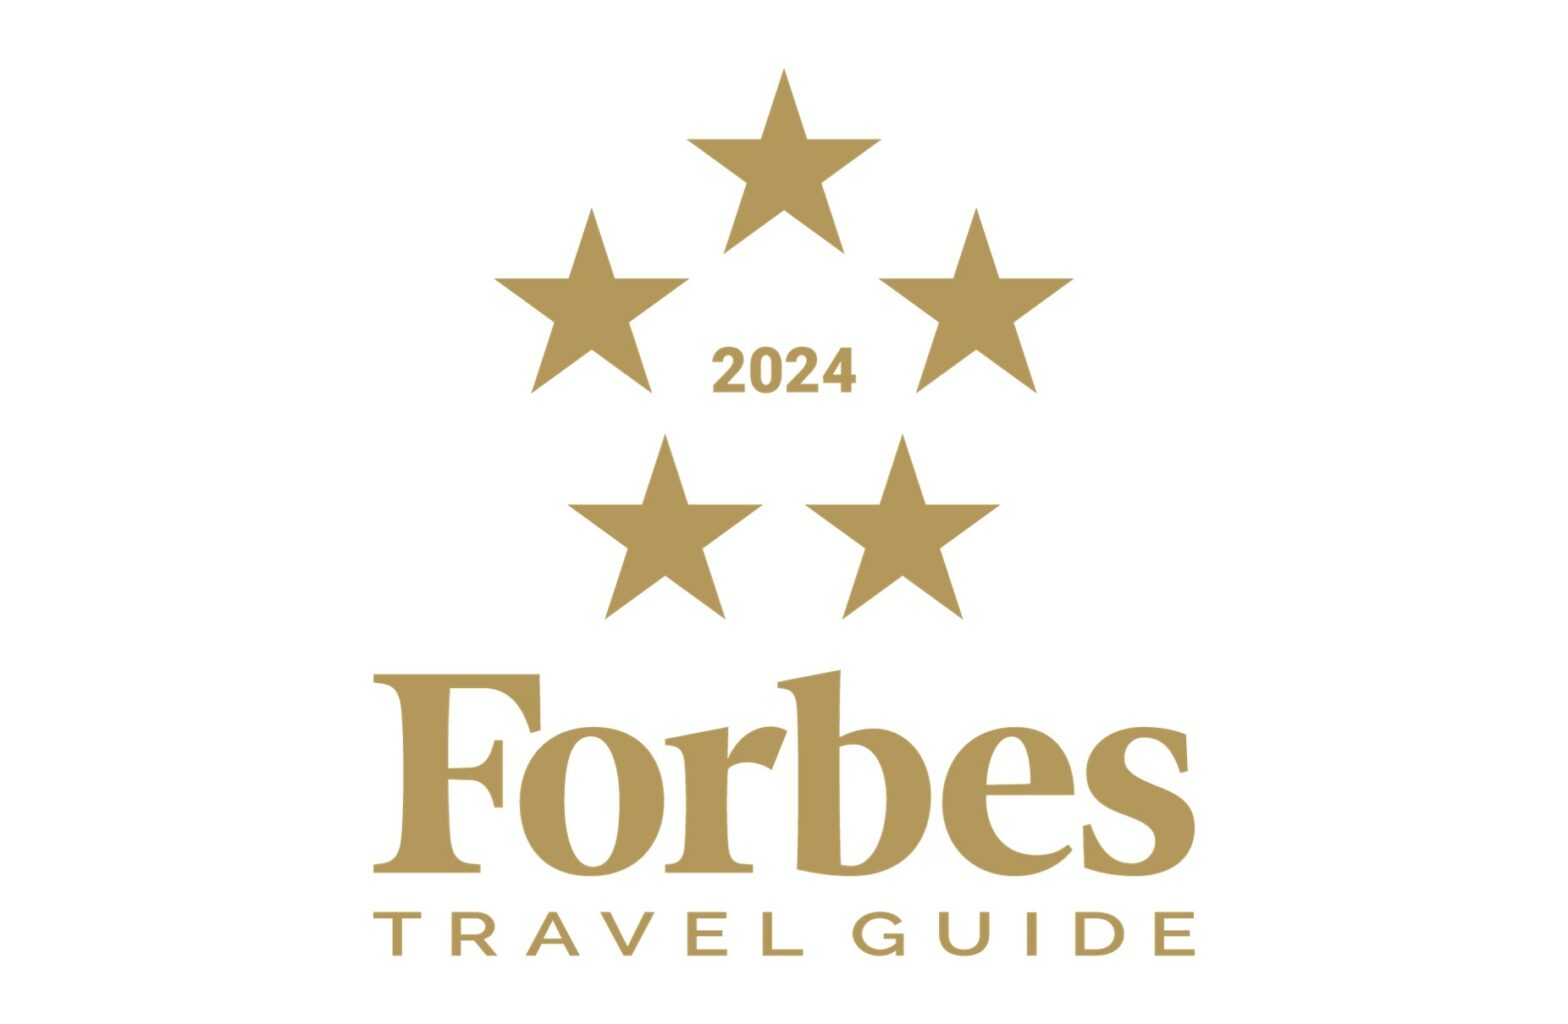 TAKANAWA HANAKOHRO was awarded by “Forbes Travel Guide for 2024”